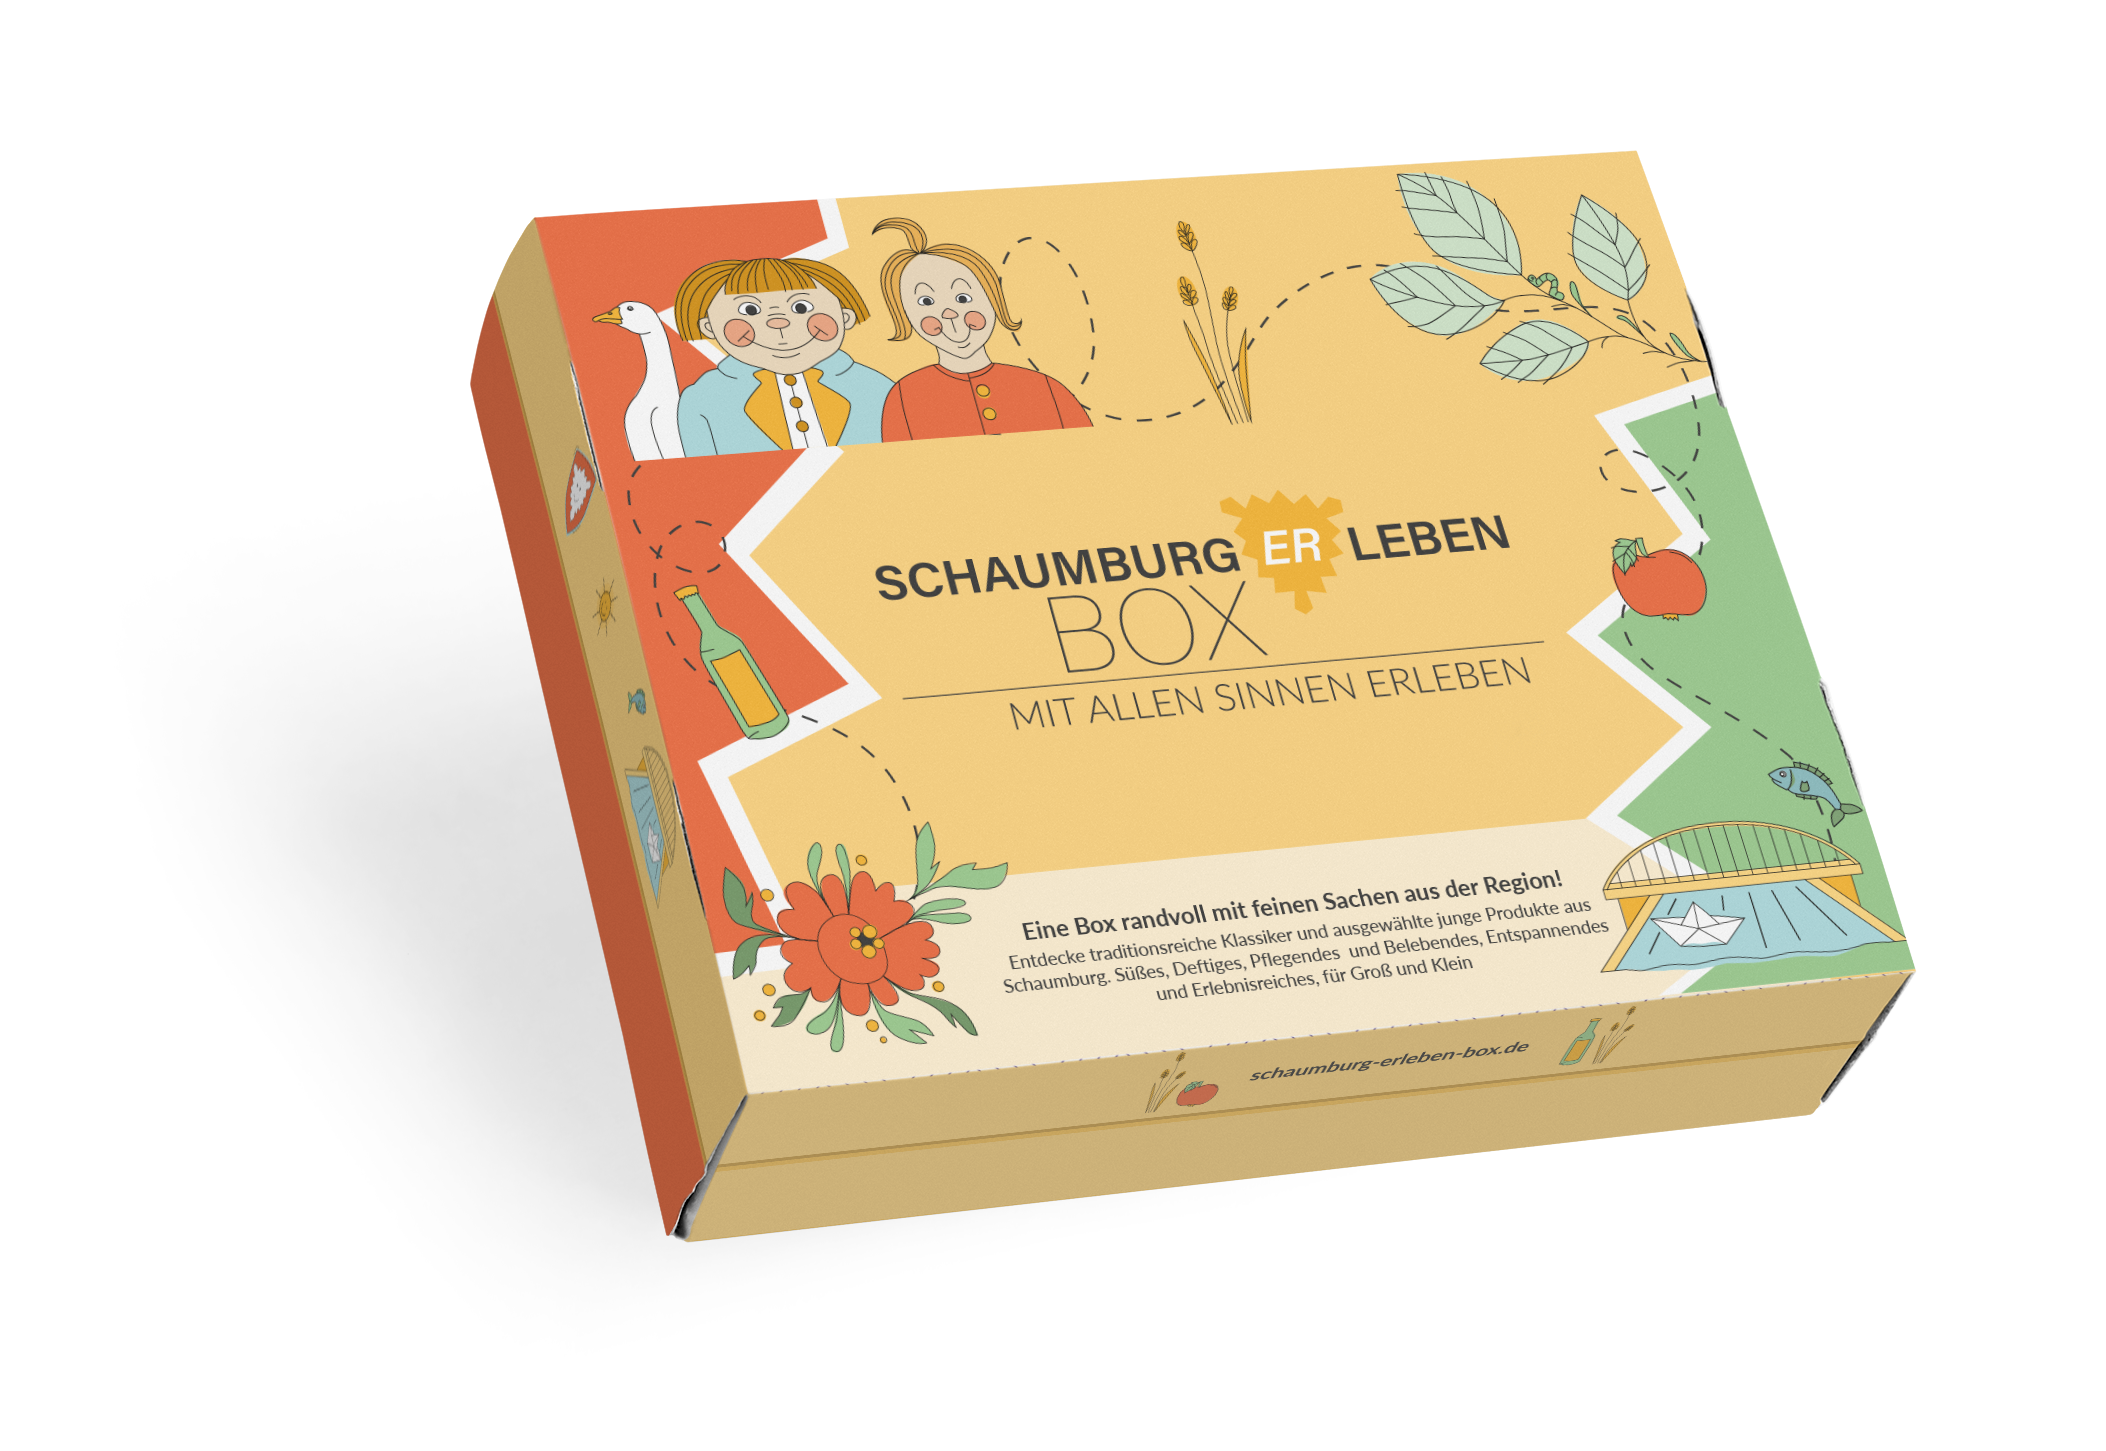 (c) Schaumburg-erleben-box.de